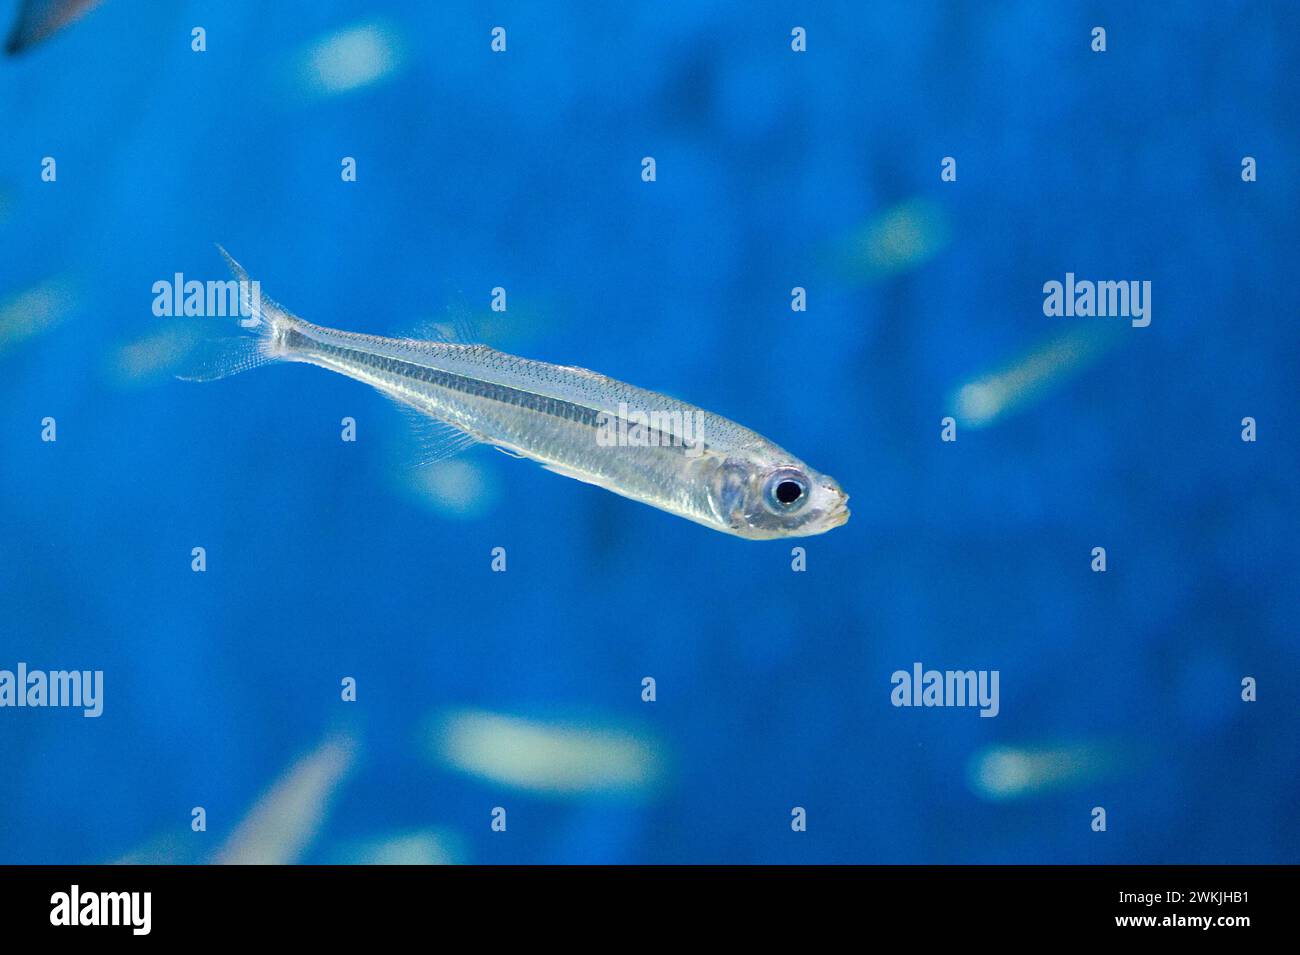 European anchovy (Engraulis encrasicolus) is a marine fish native to Mediterranean Sea and Atlantic coast of Europe. Anchovy eat zooplancton. Stock Photo